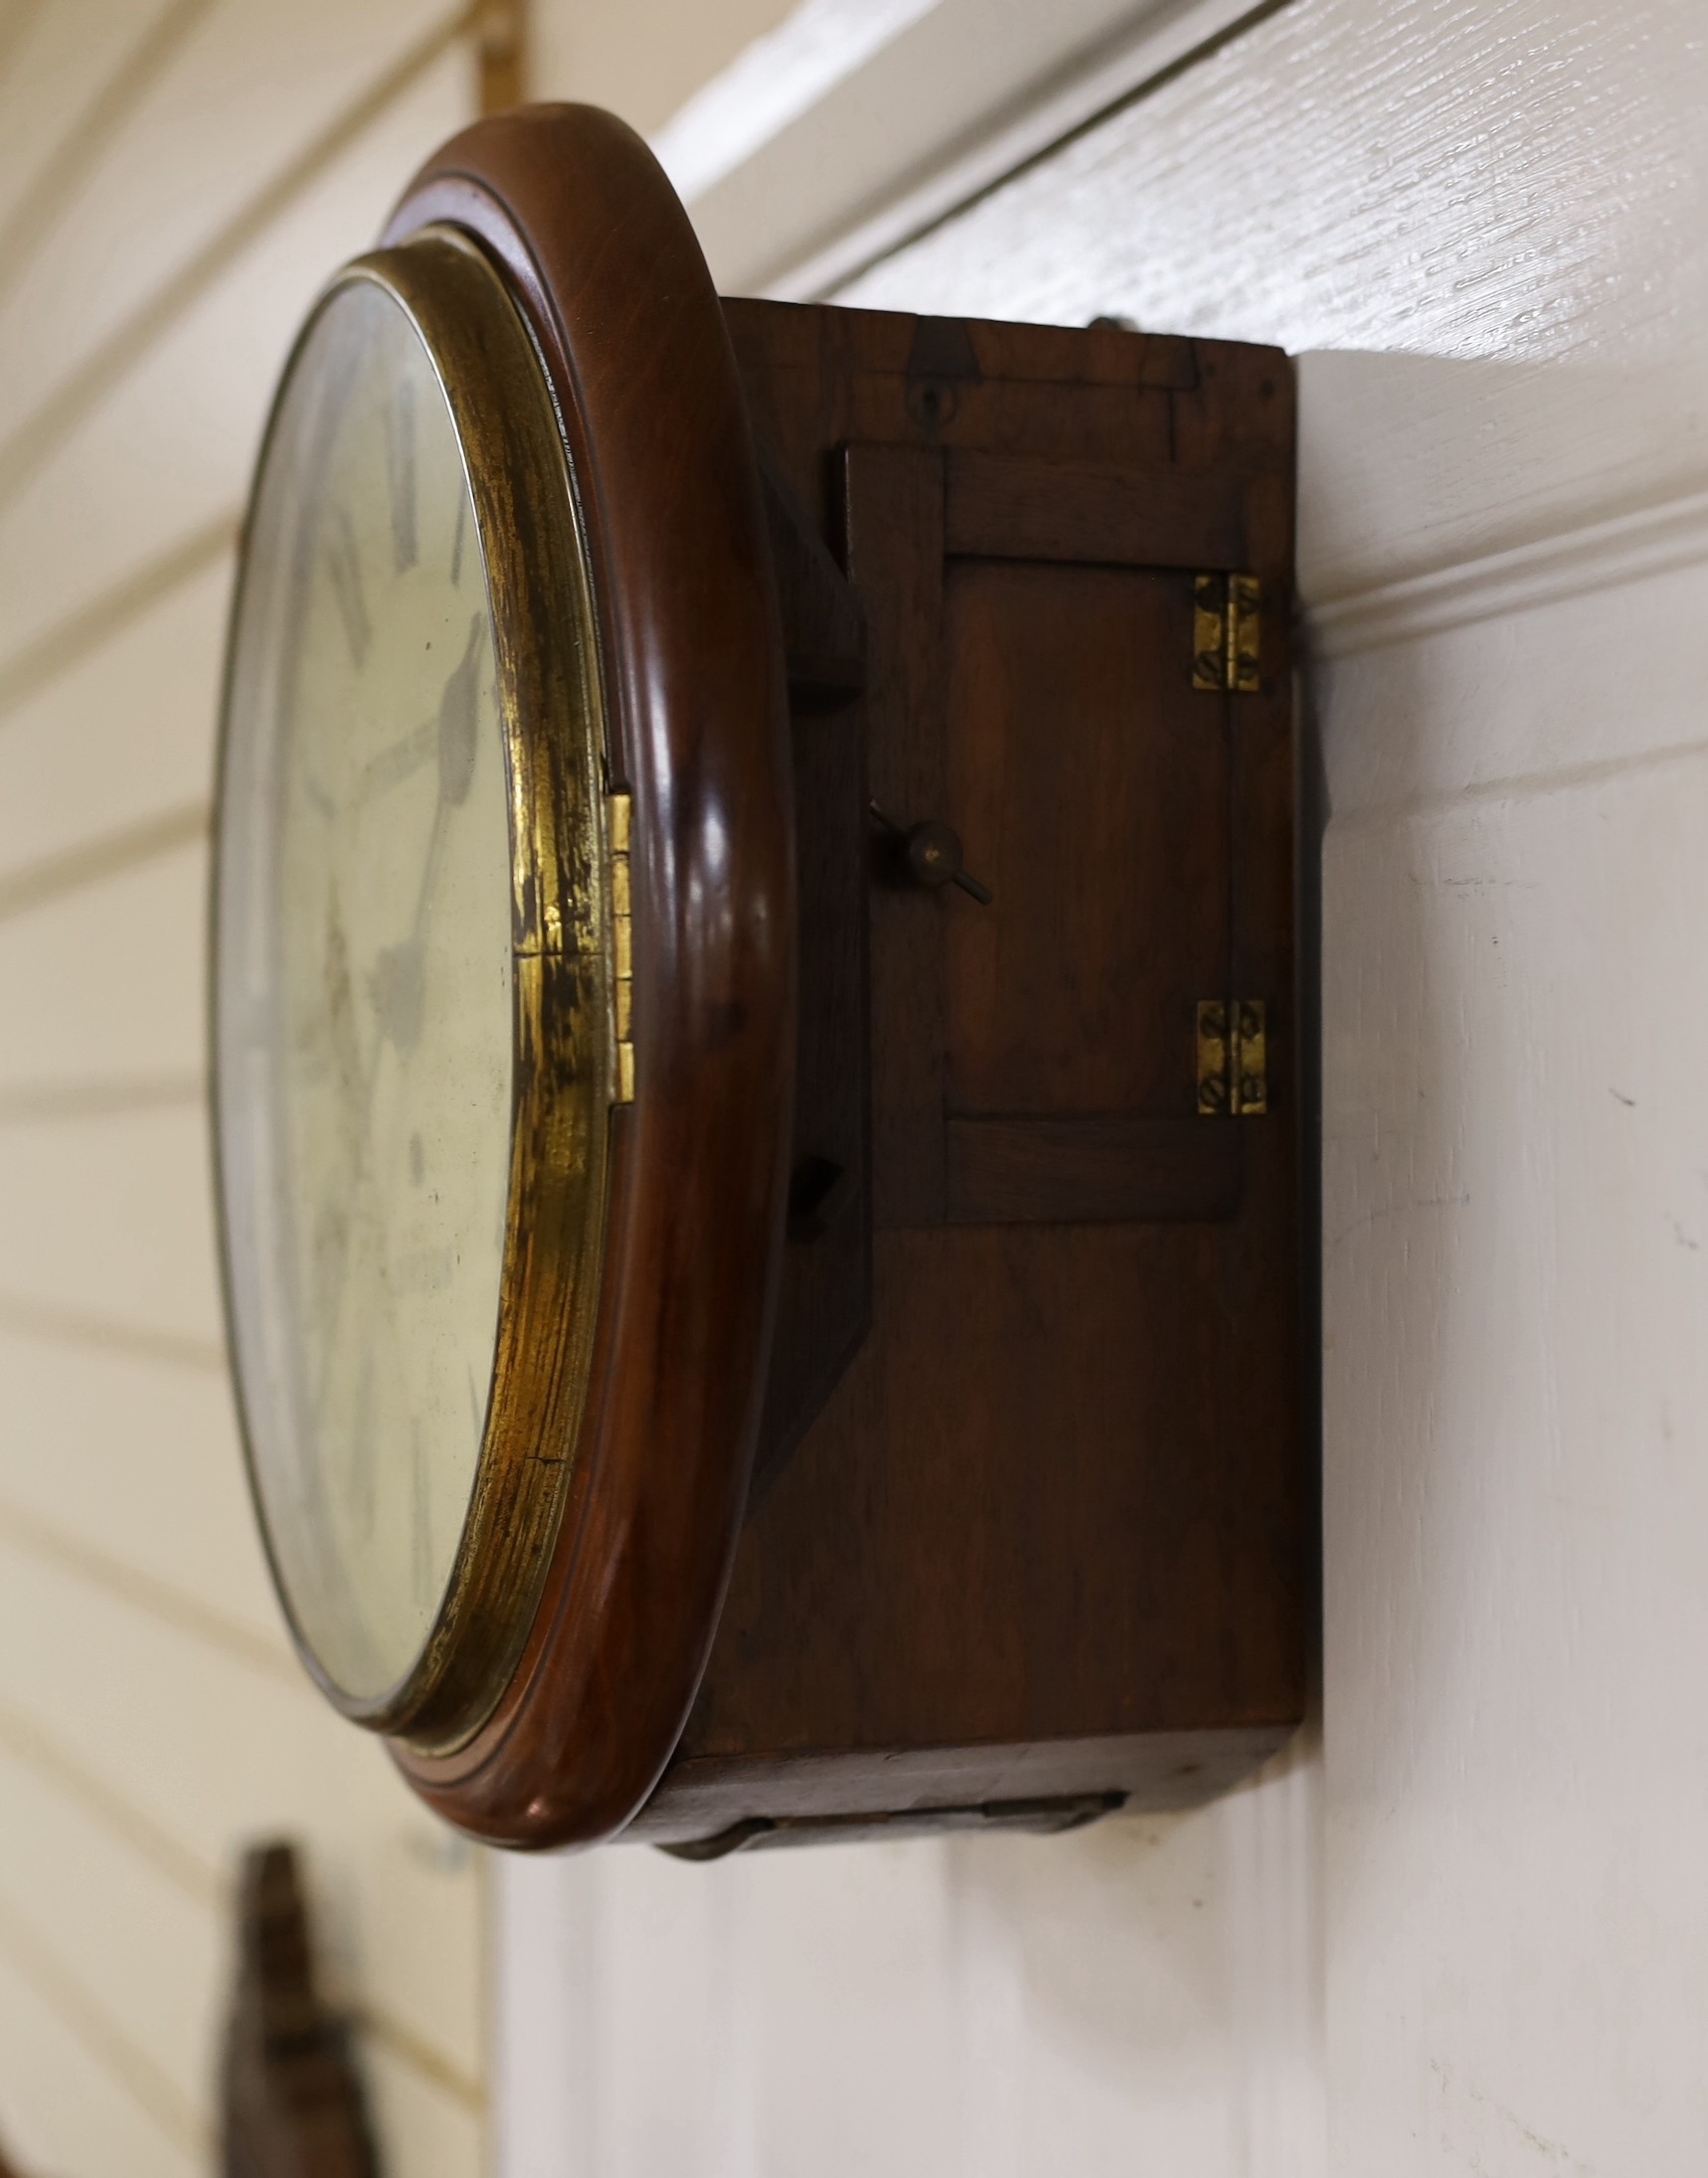 A late 19th/early 20th century Jas. Schoolbred mahogany wall dial clock